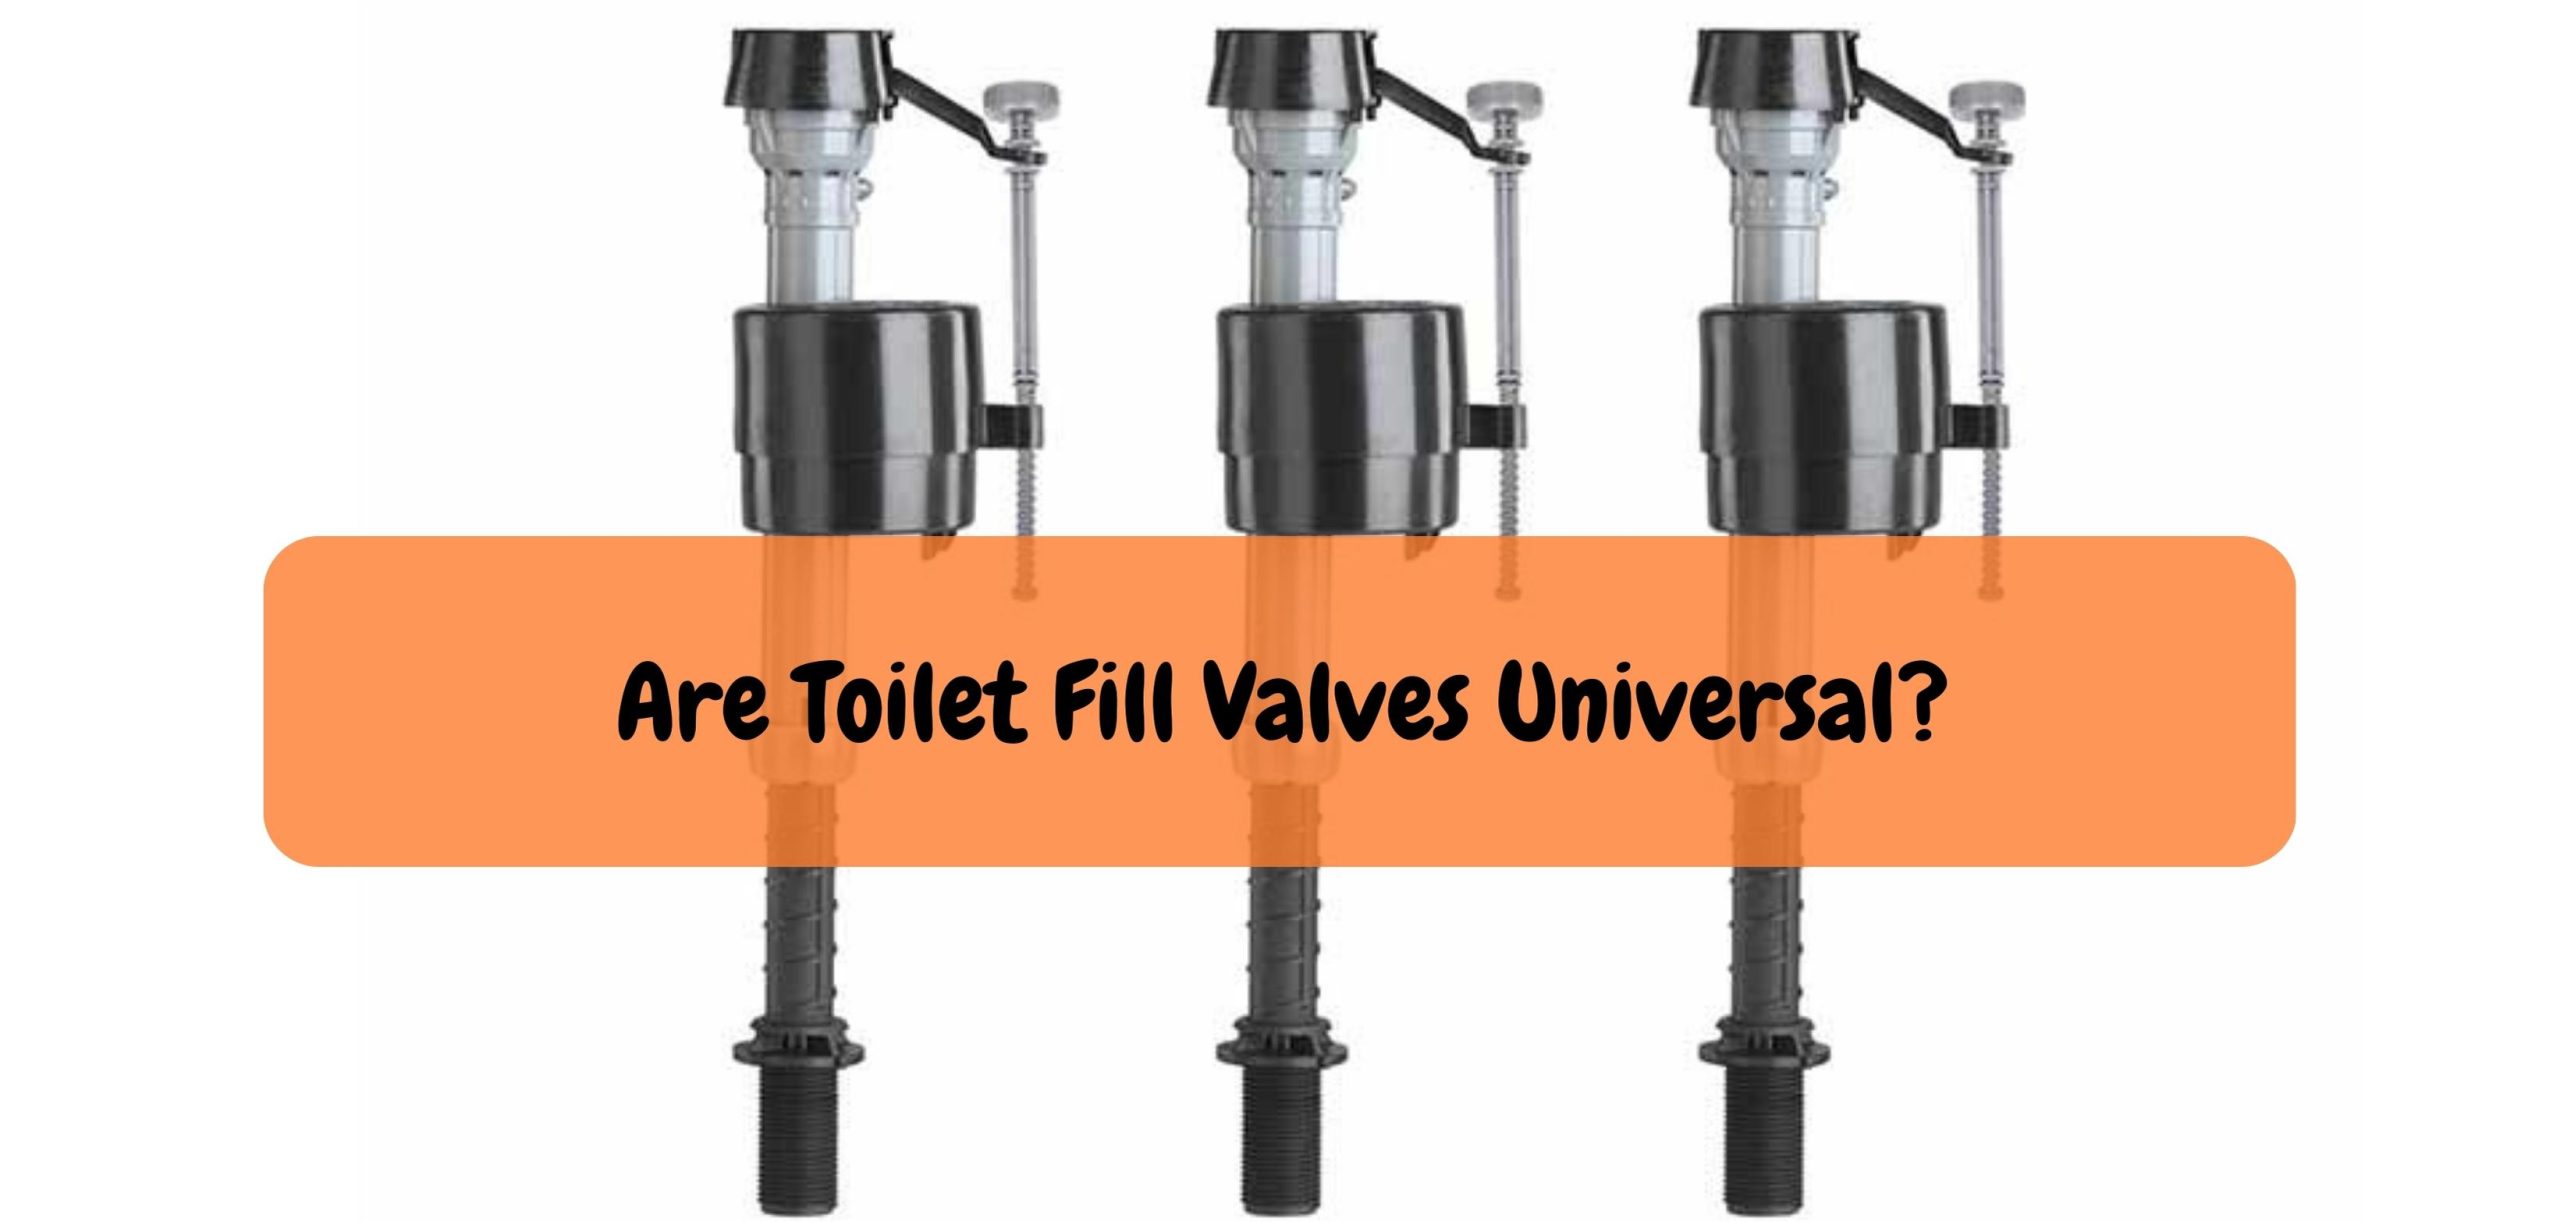 Are Toilet Fill Valves Universal